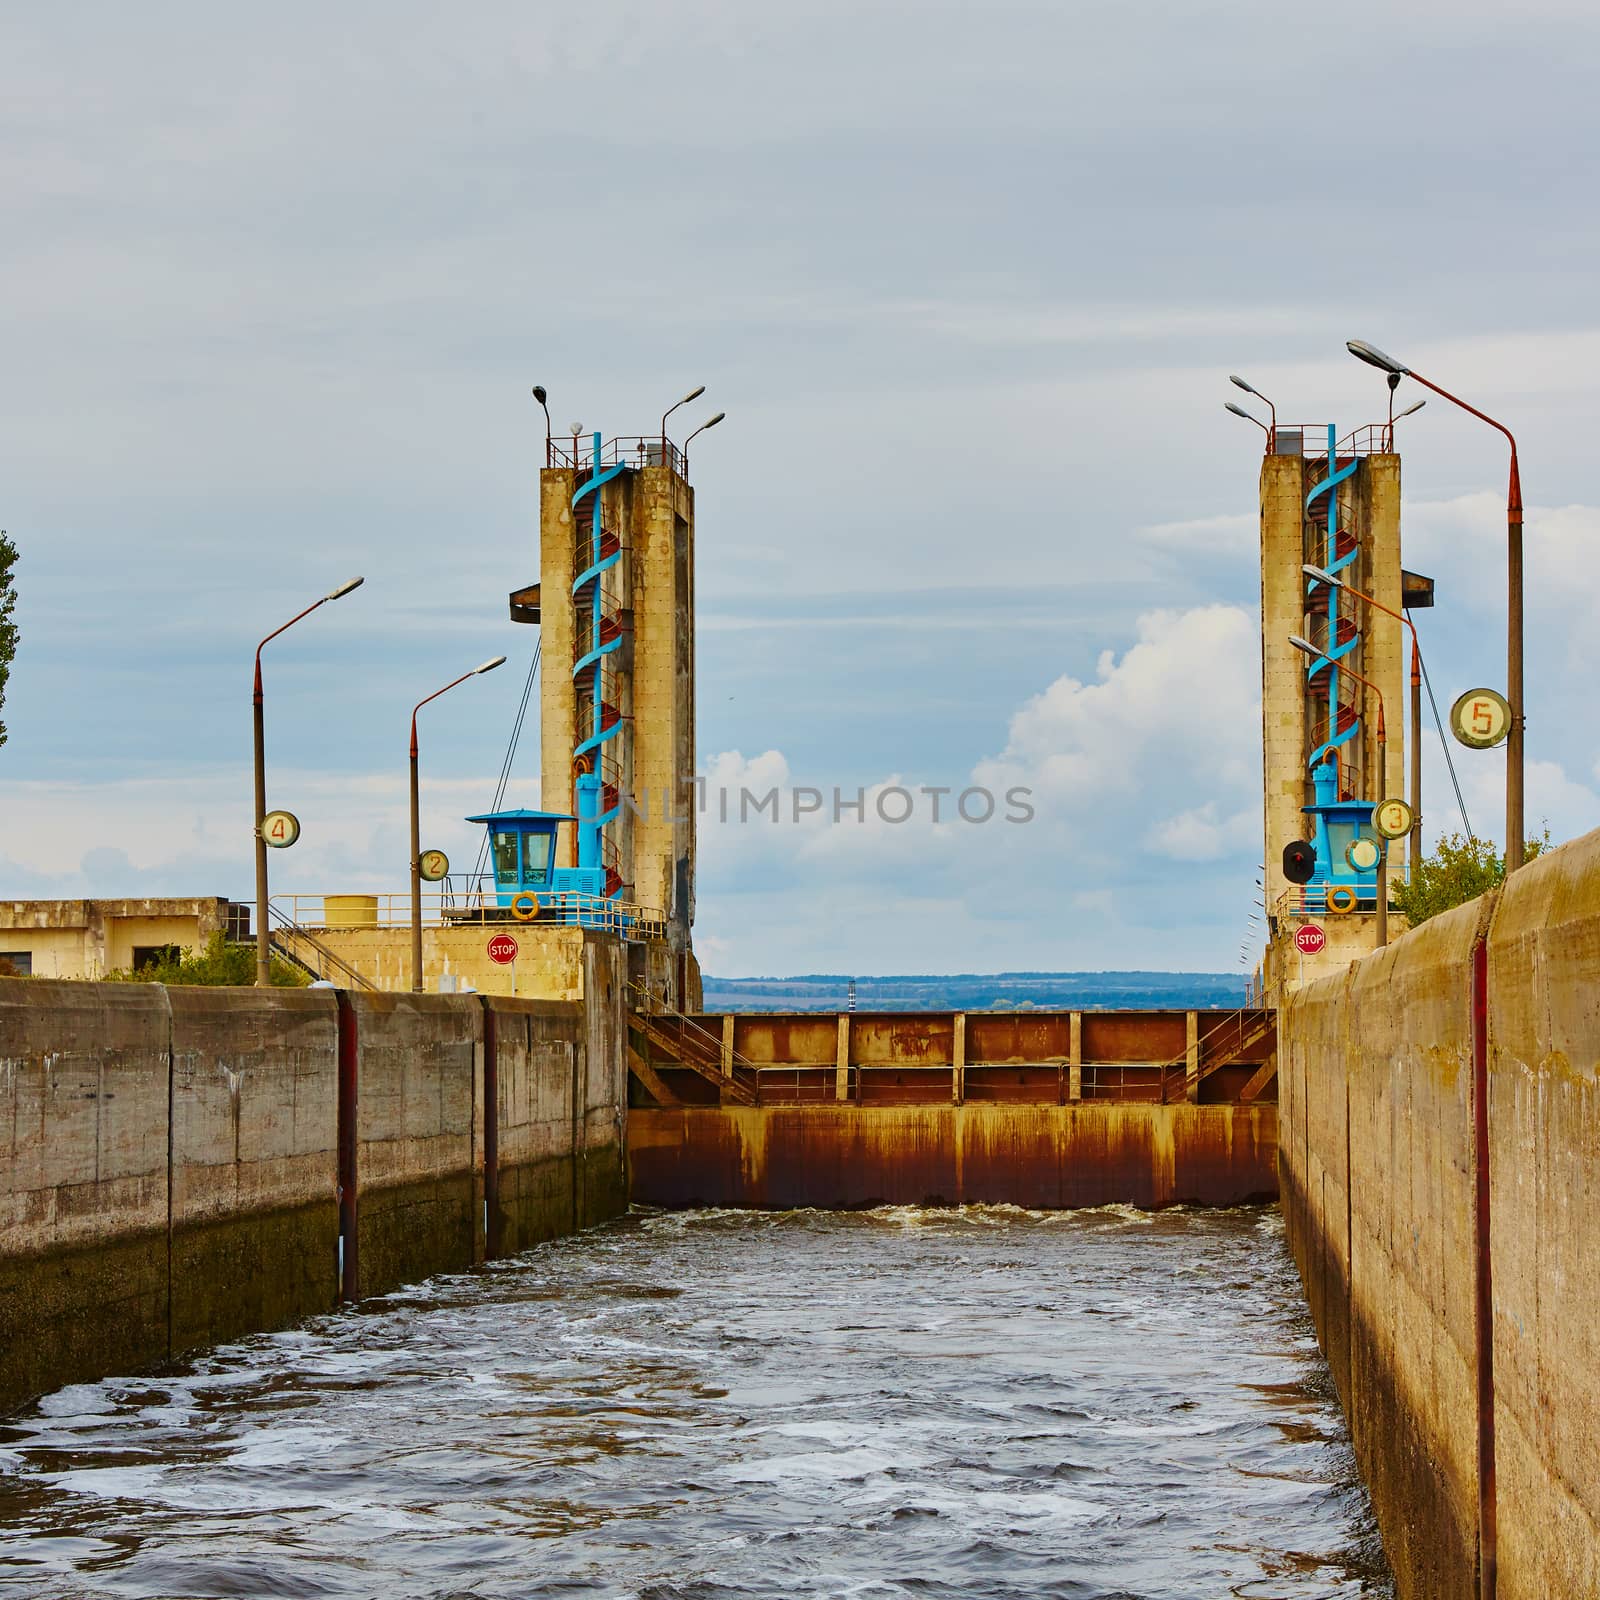 One of the locks on the navigable river Dnepr in Ukraine